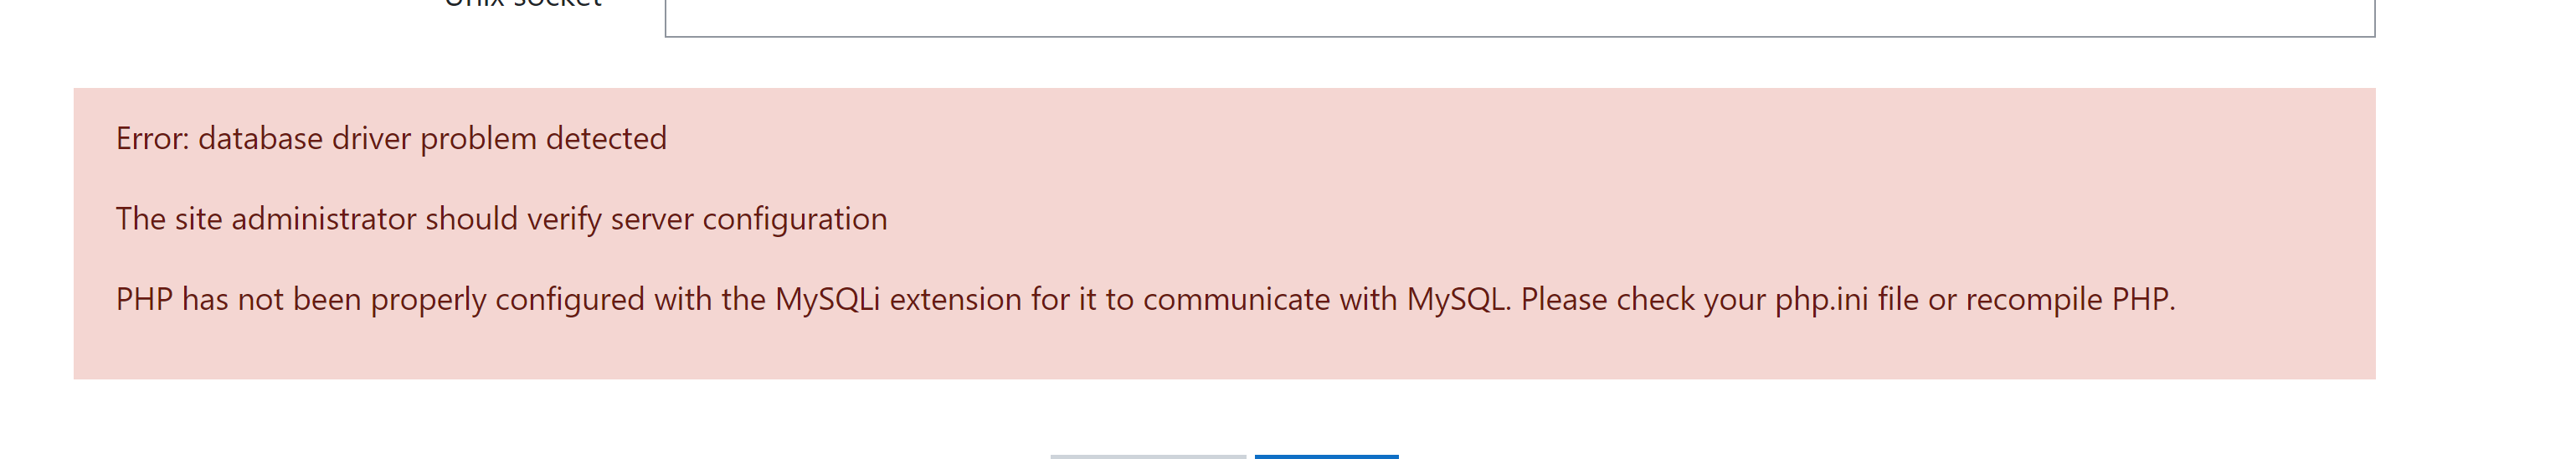 ошибка драйвера базы данных обнаружена задержка mssql